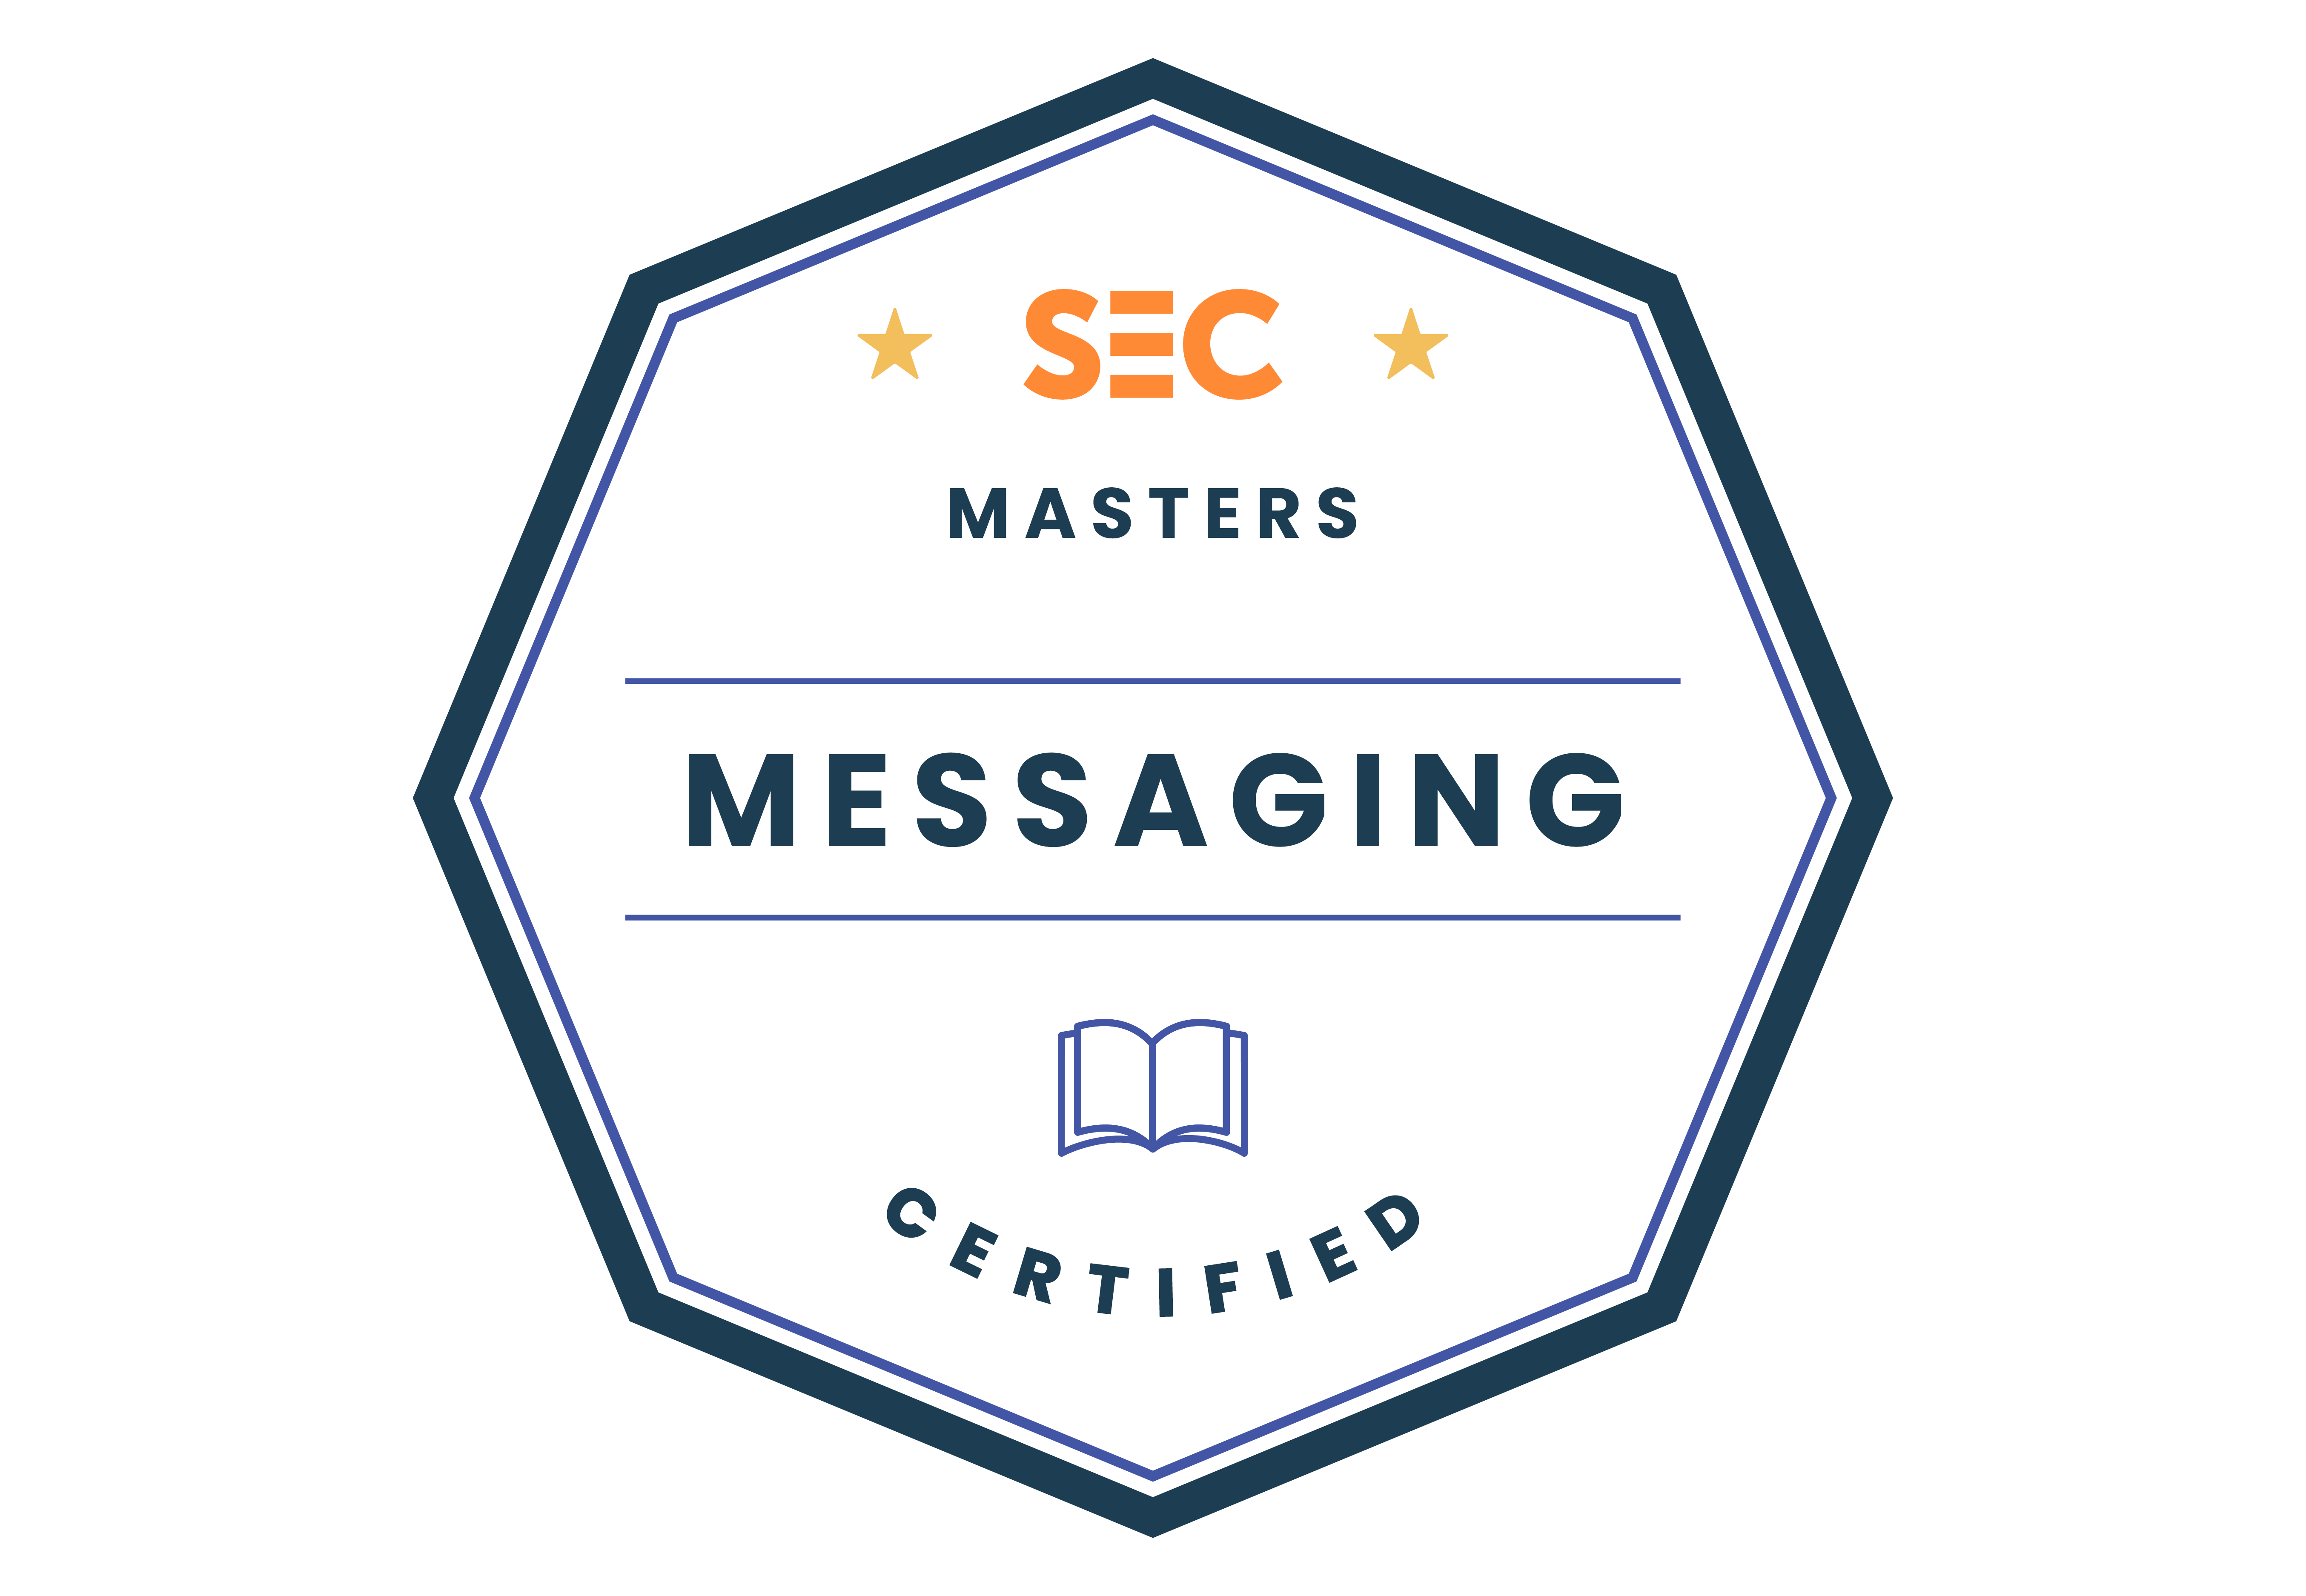 Messaging Certified | Masters badge 